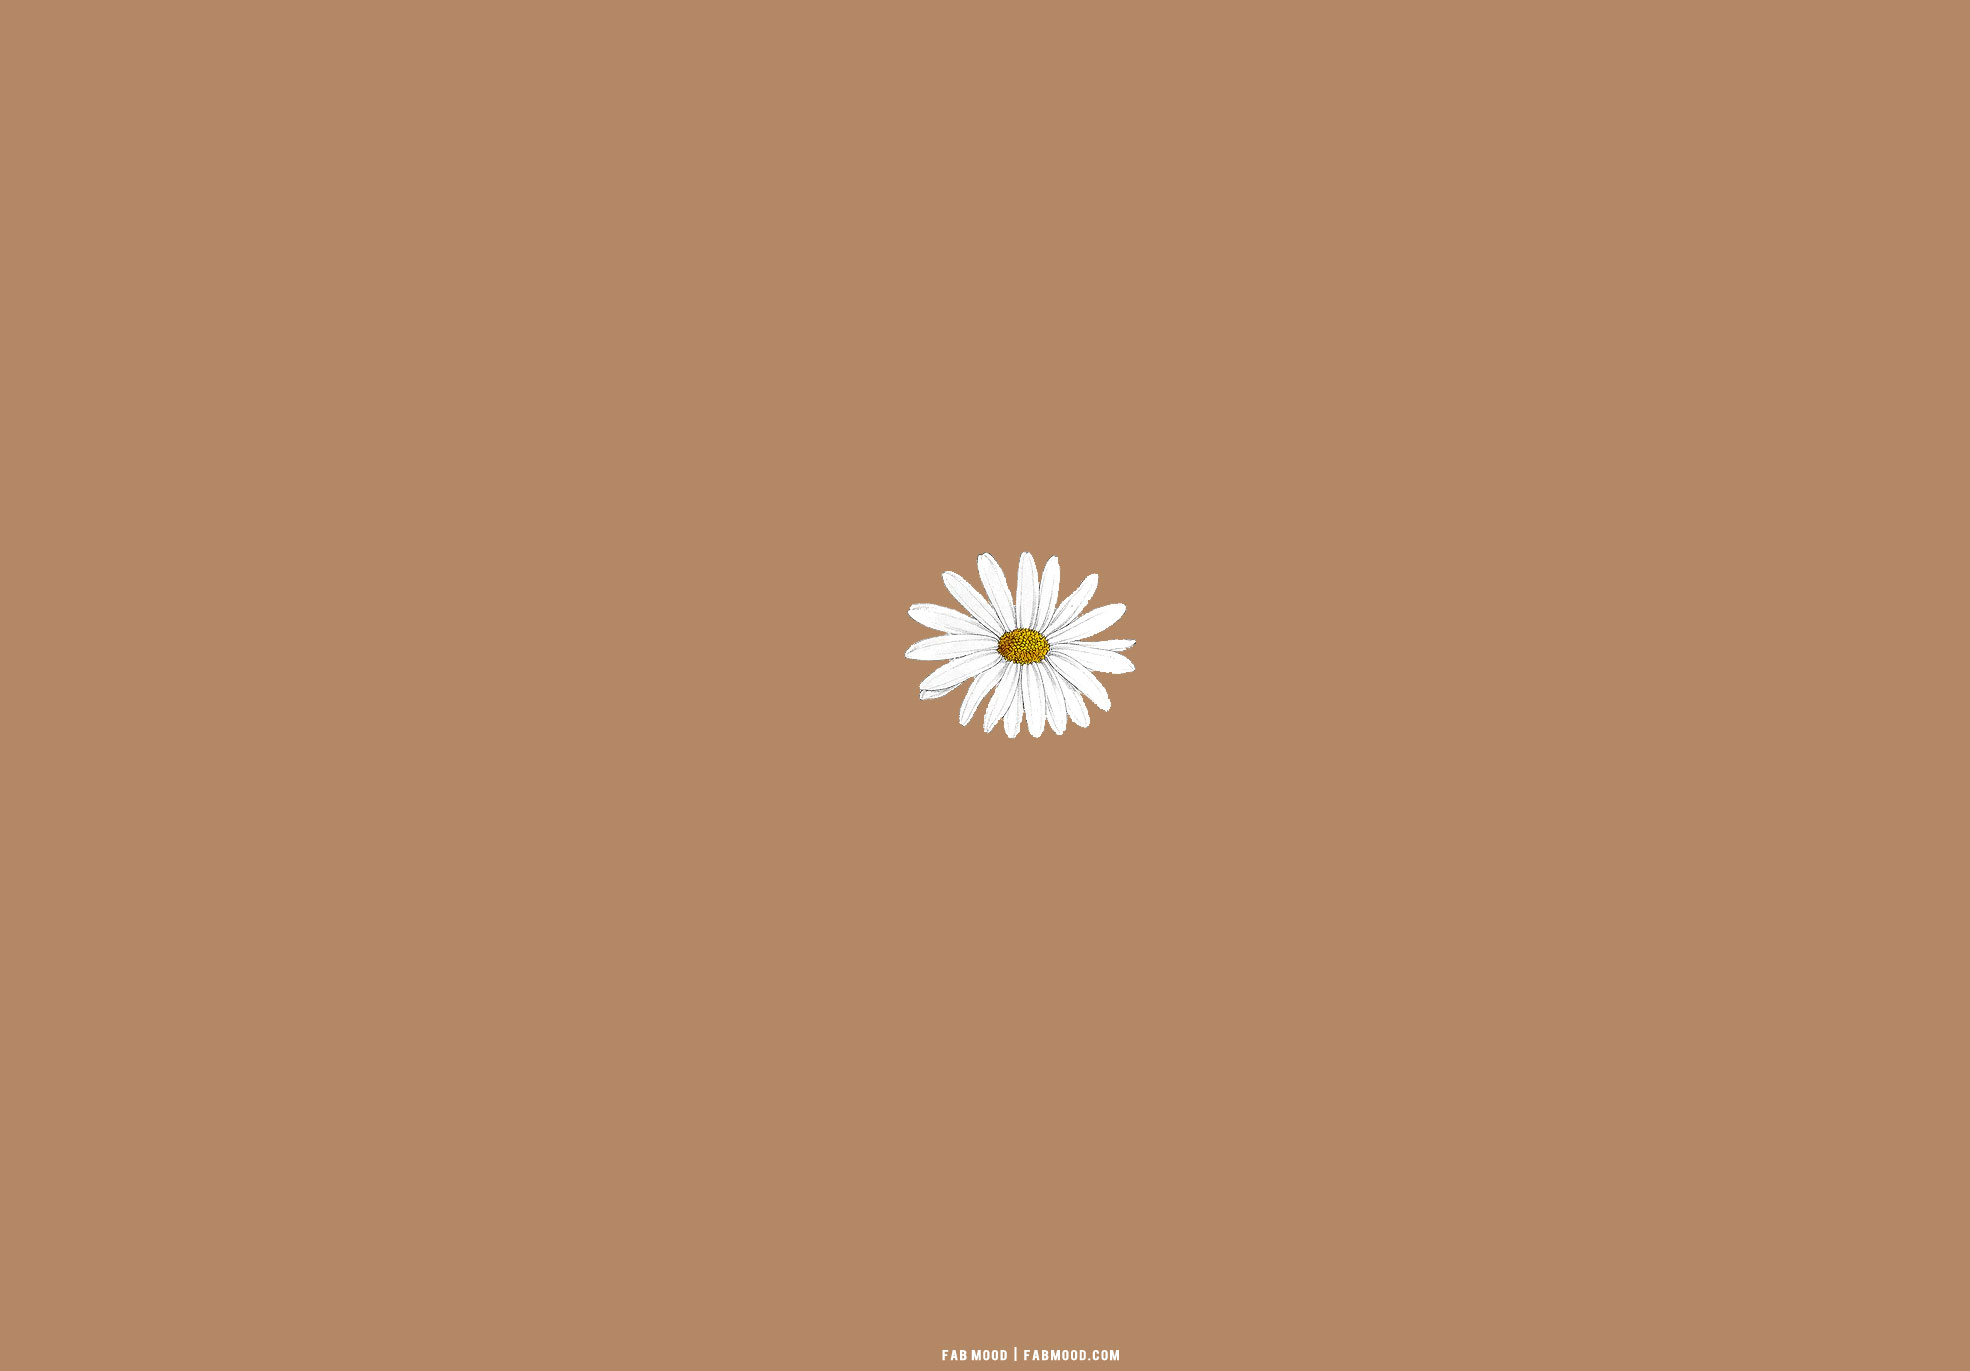 Brown aesthetic wallpaper for laptop daisy